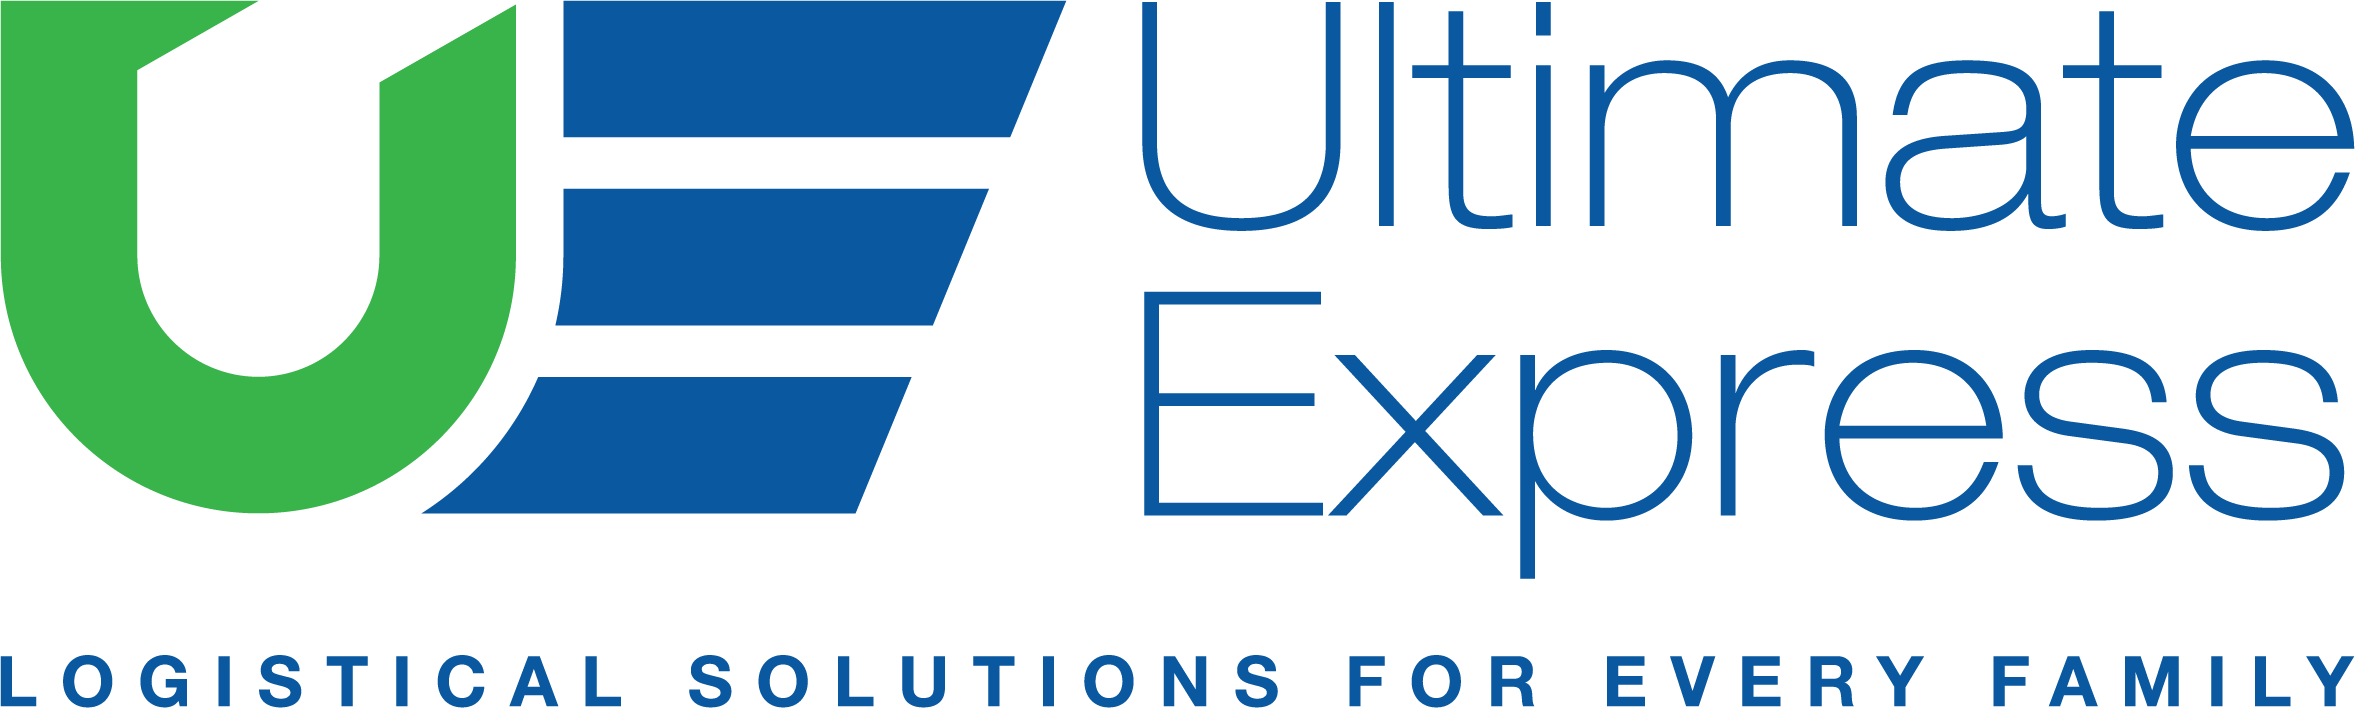 Ultimate Express final logo.png